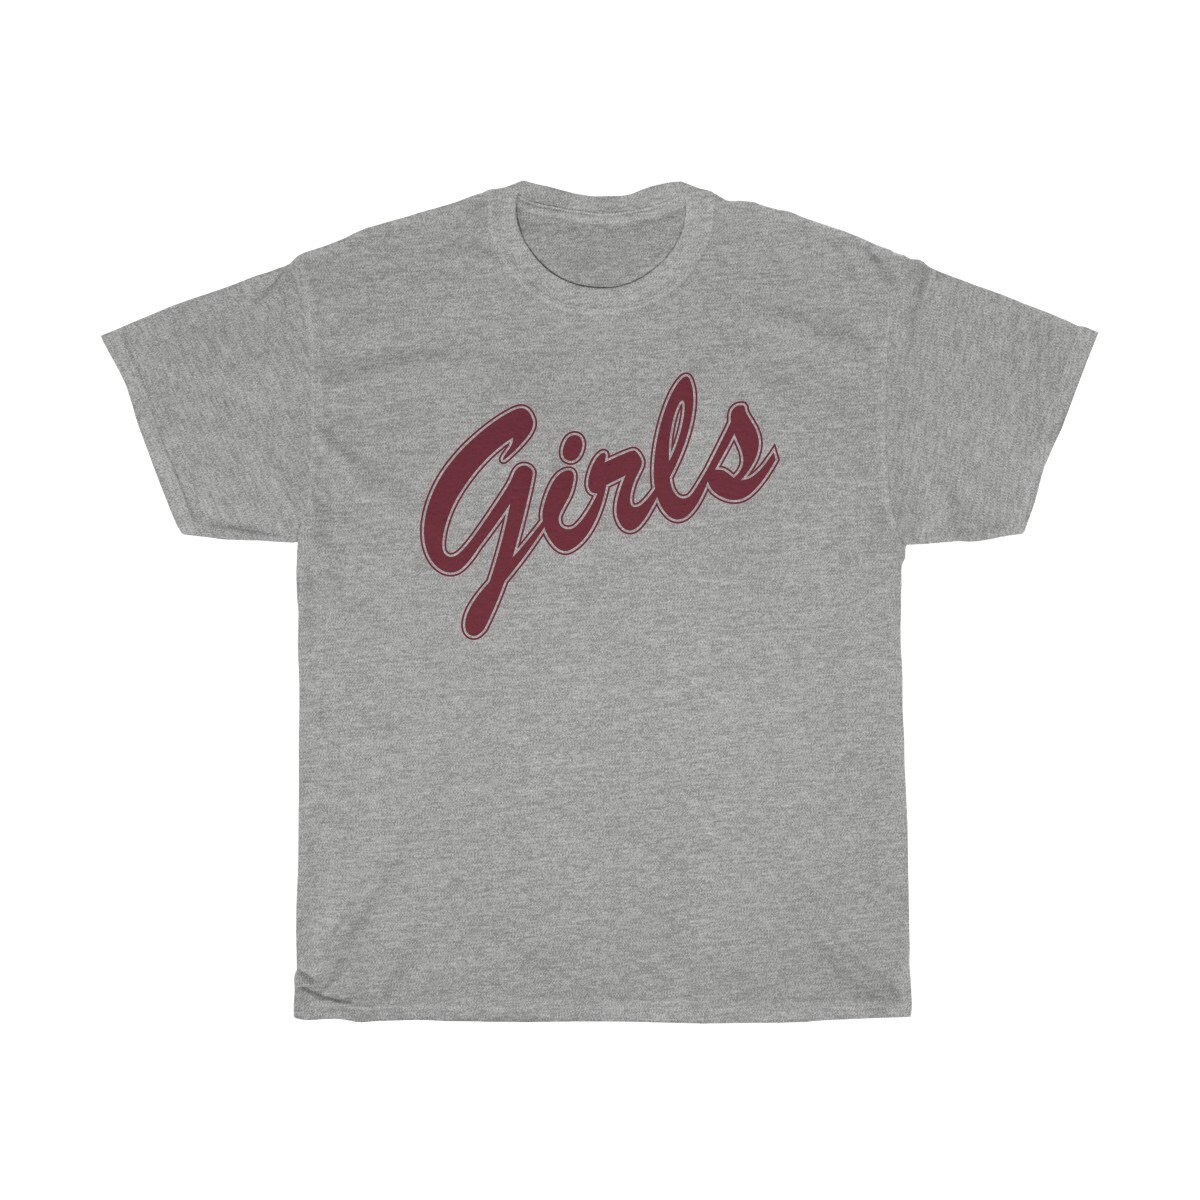 Rachel Green Monica Geller Vintage Girls Tee Shirt Girls | Etsy